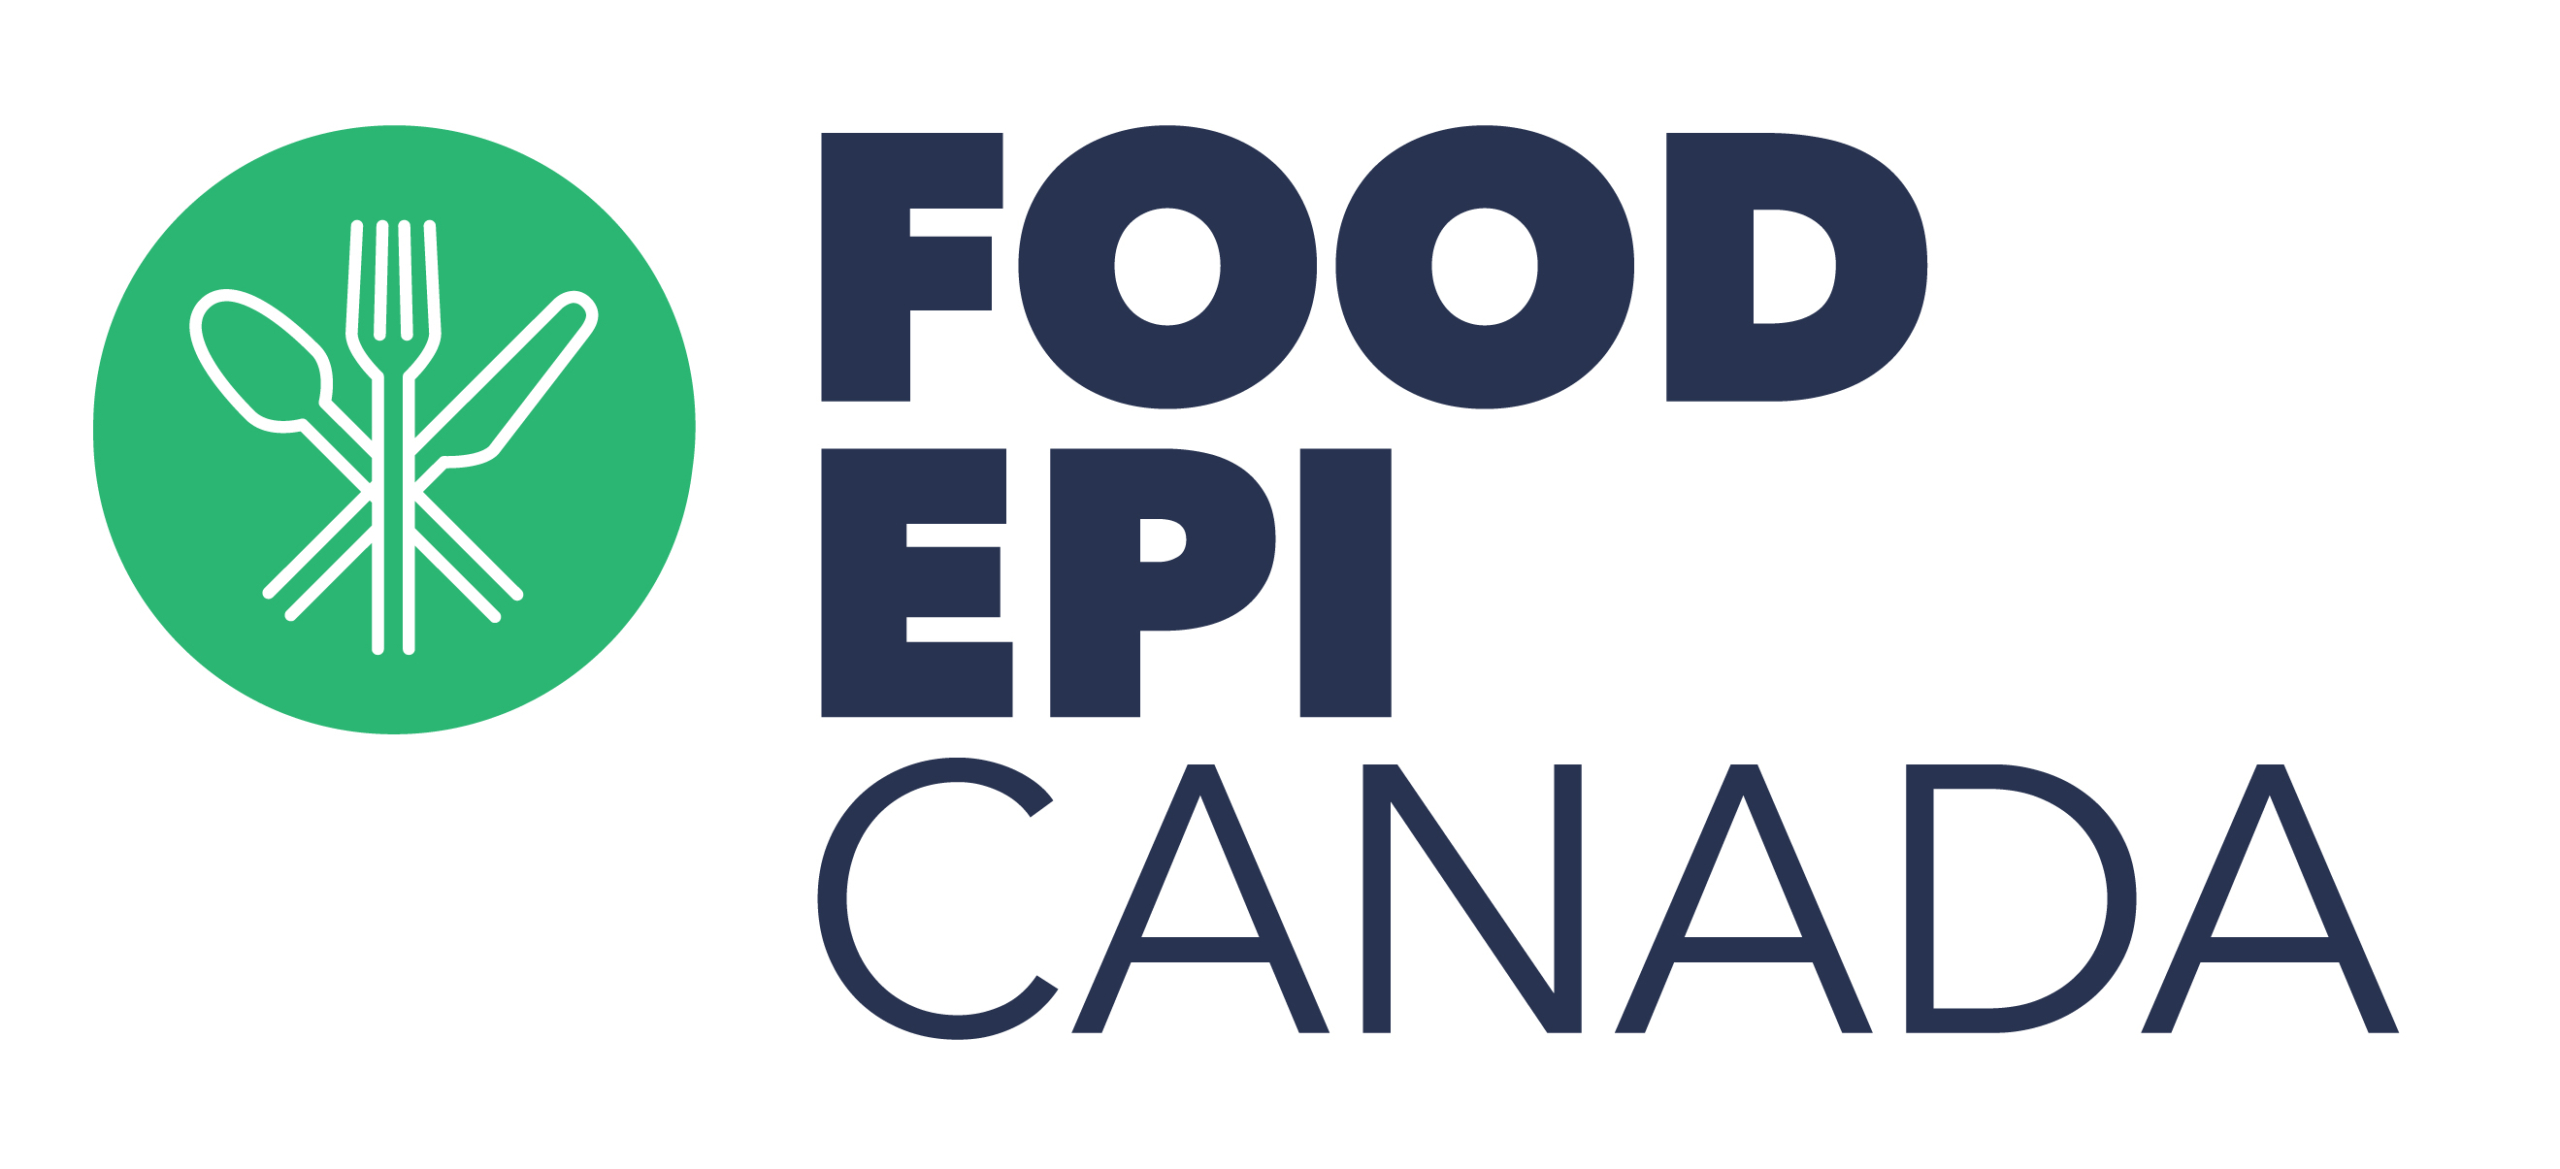 Food-EPI Canada 2017